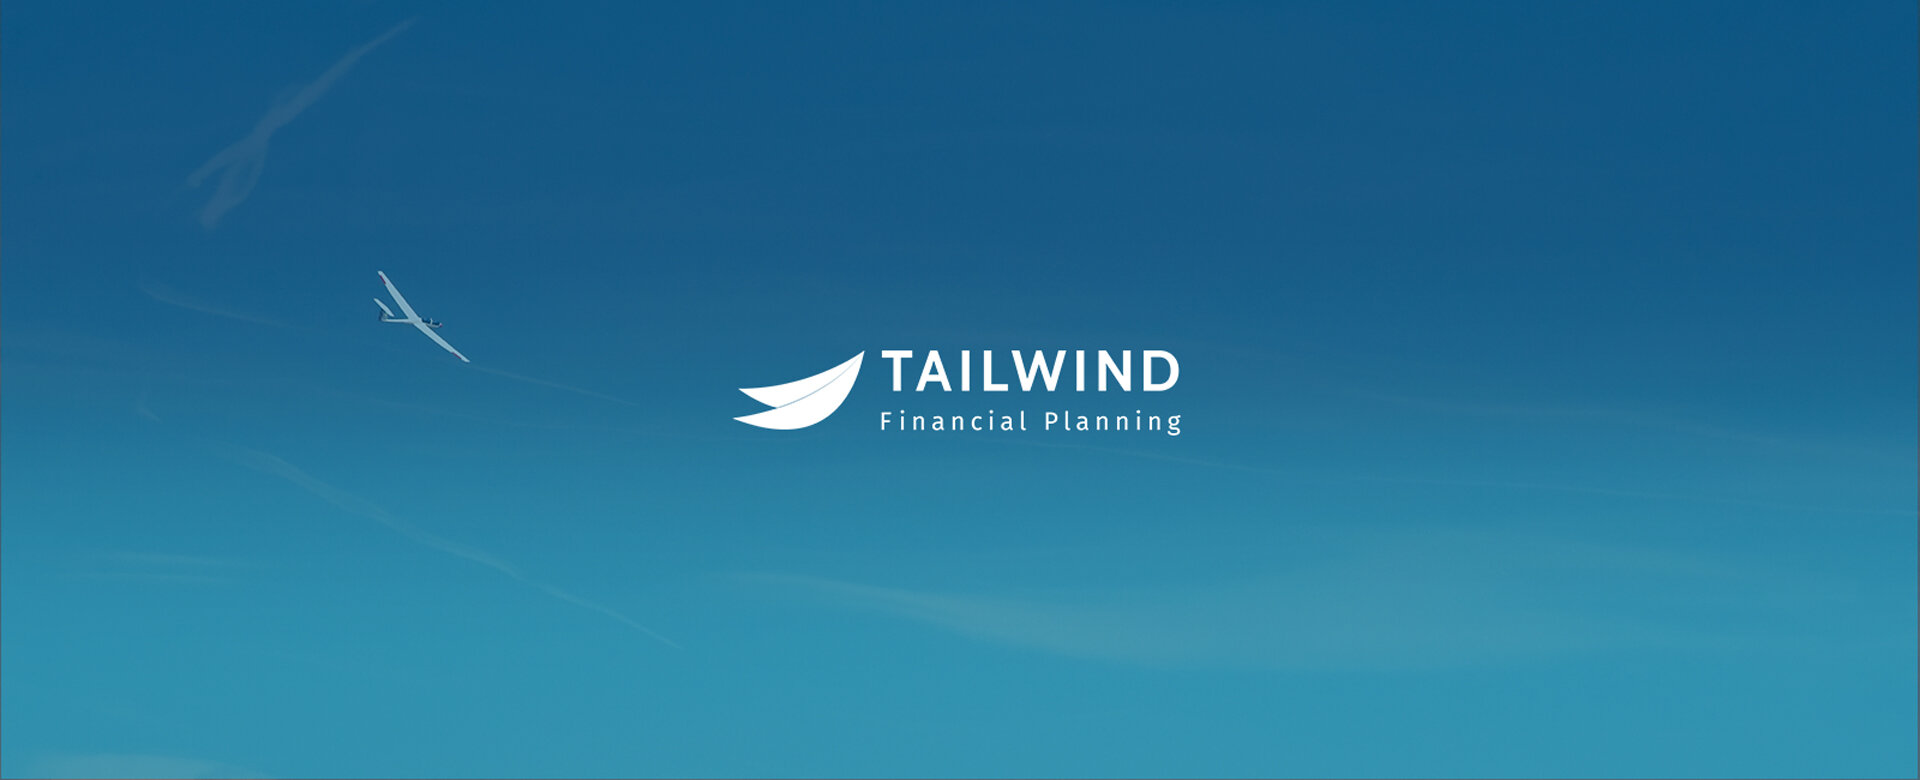 tailwind financial